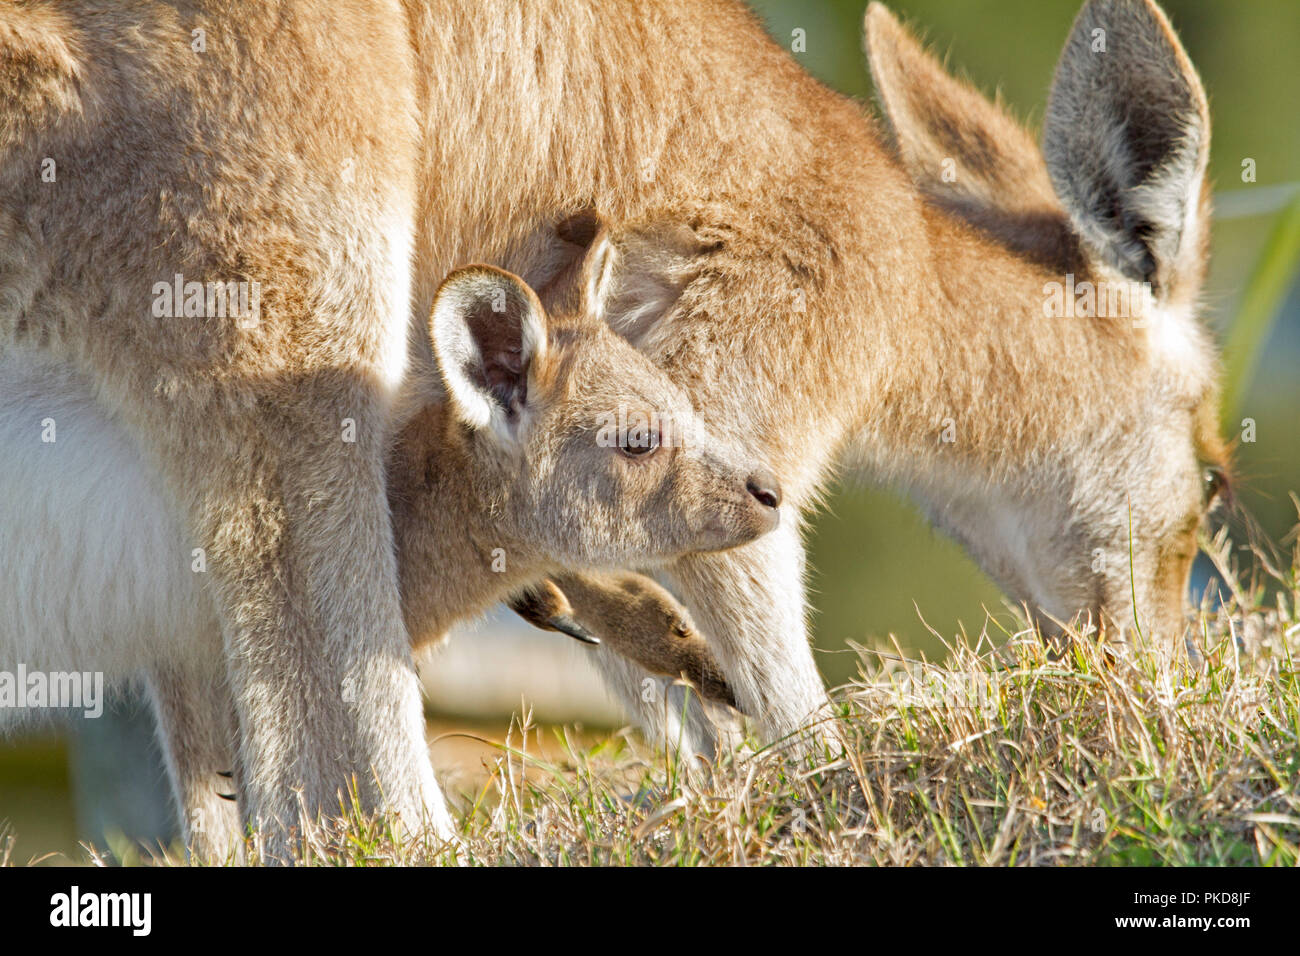 Baby joey eastern grey kangaroo, Macropus giganteus, peering out of pouch between its moher's legs in the wild in NSW Australia Stock Photo